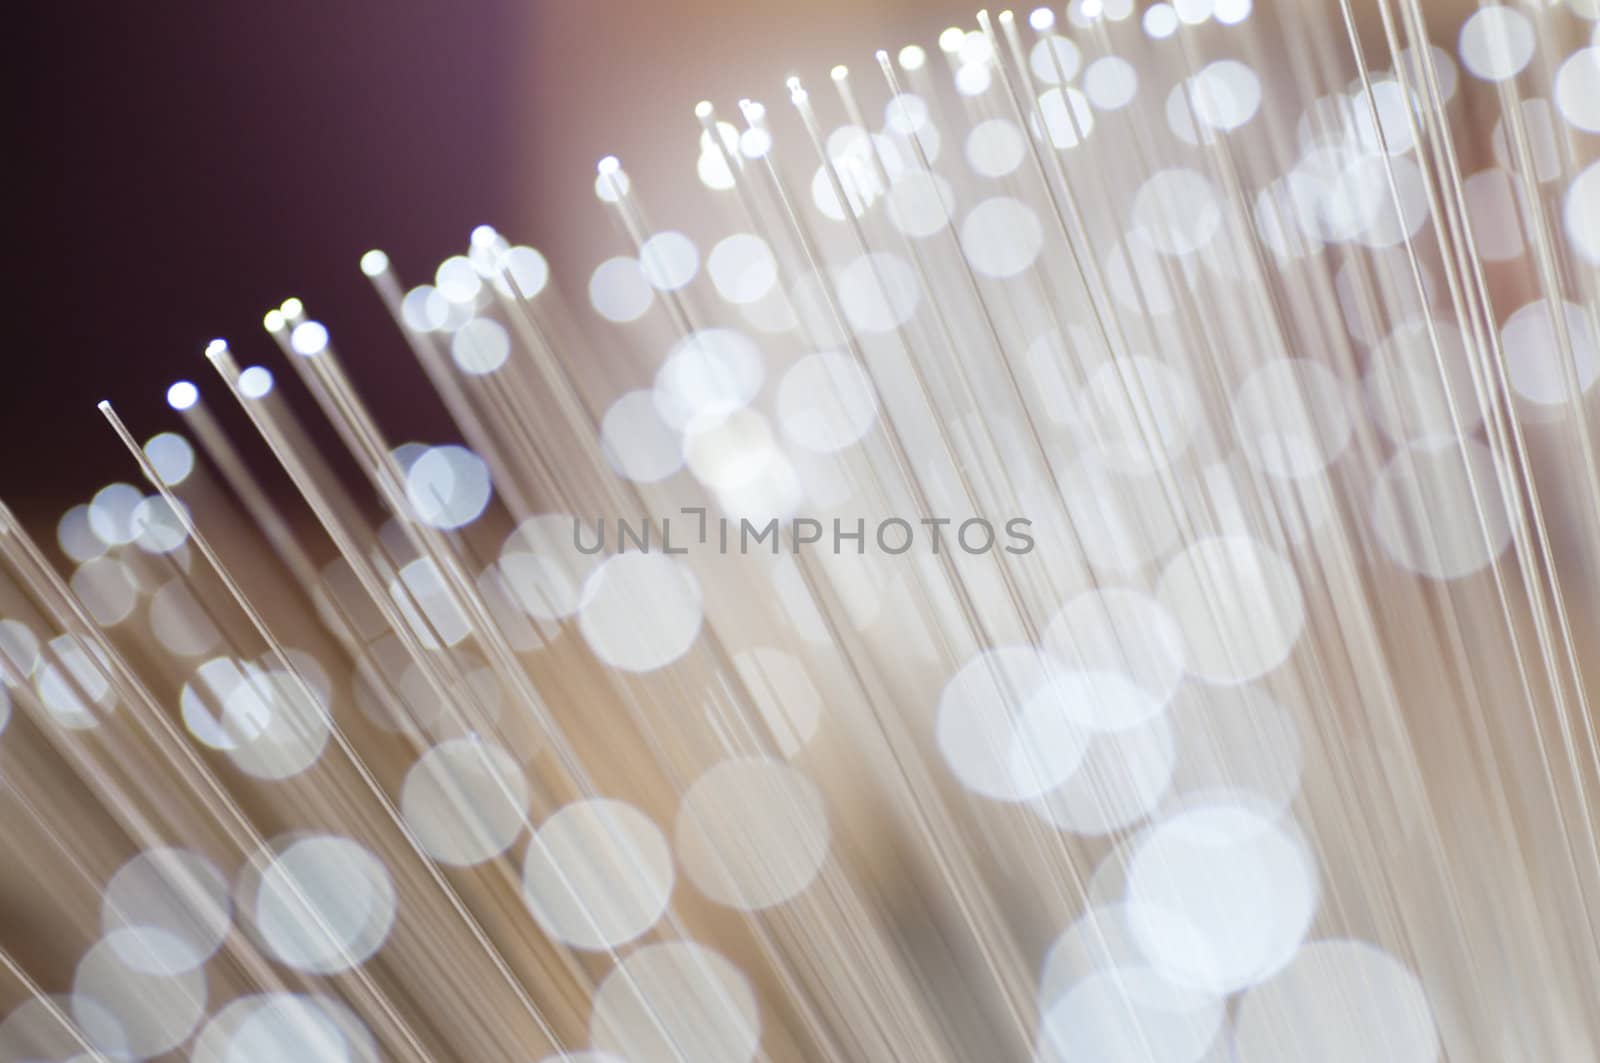 Optical fiber by FernandoCortes